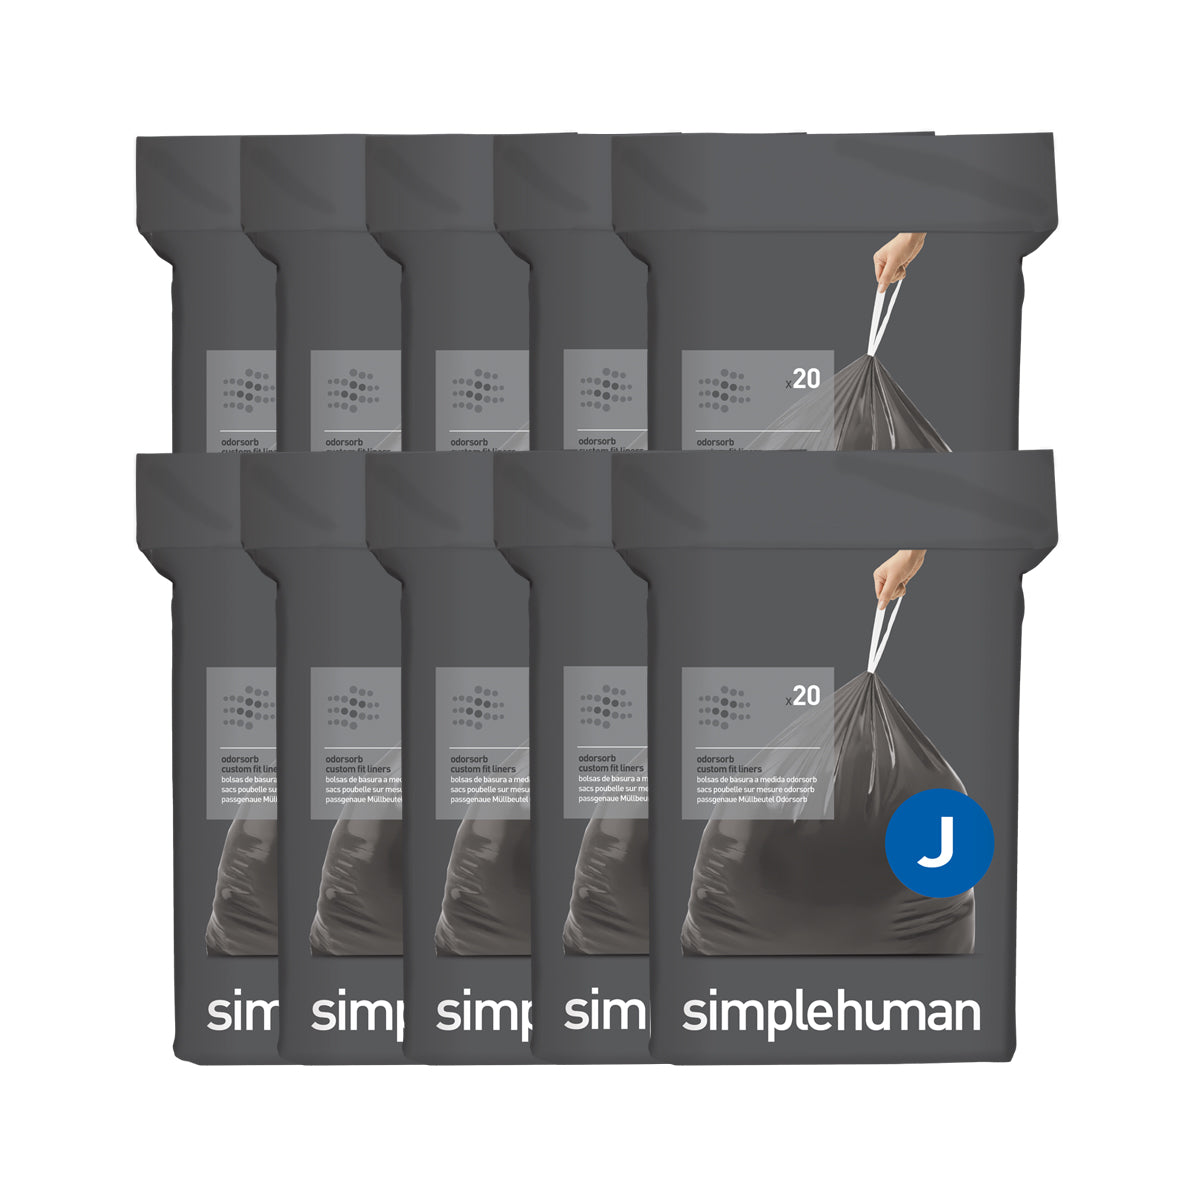 simplehuman code J custom fit liners